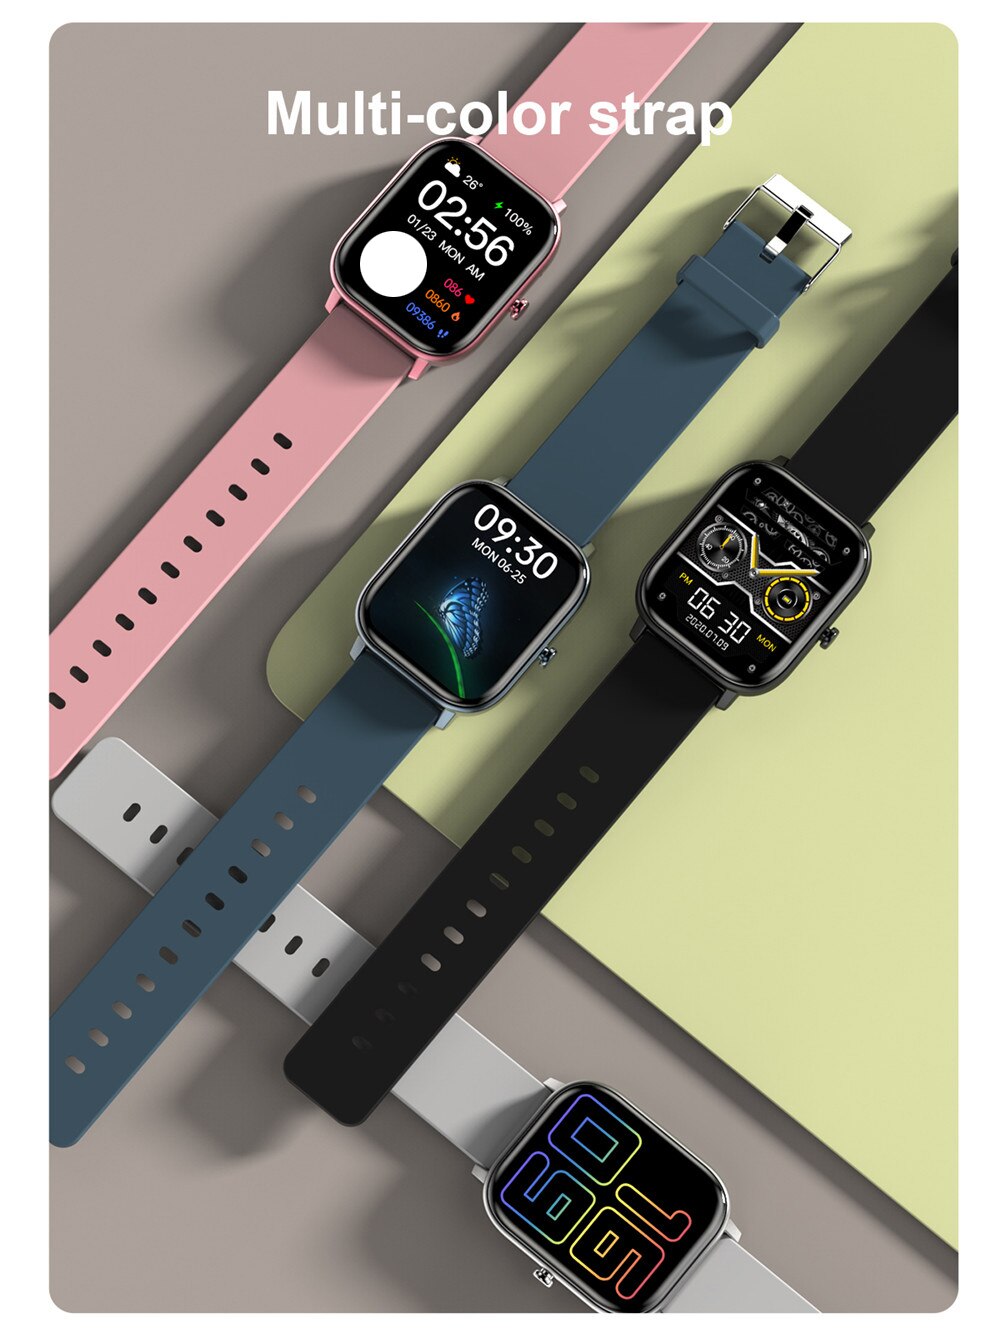 Bluetooth Call Smart Watch Men Women 1.6 inch Full Touch Screen Smartwatch Blood Pressure Heart Rate Fitness Tracker Sport Watch